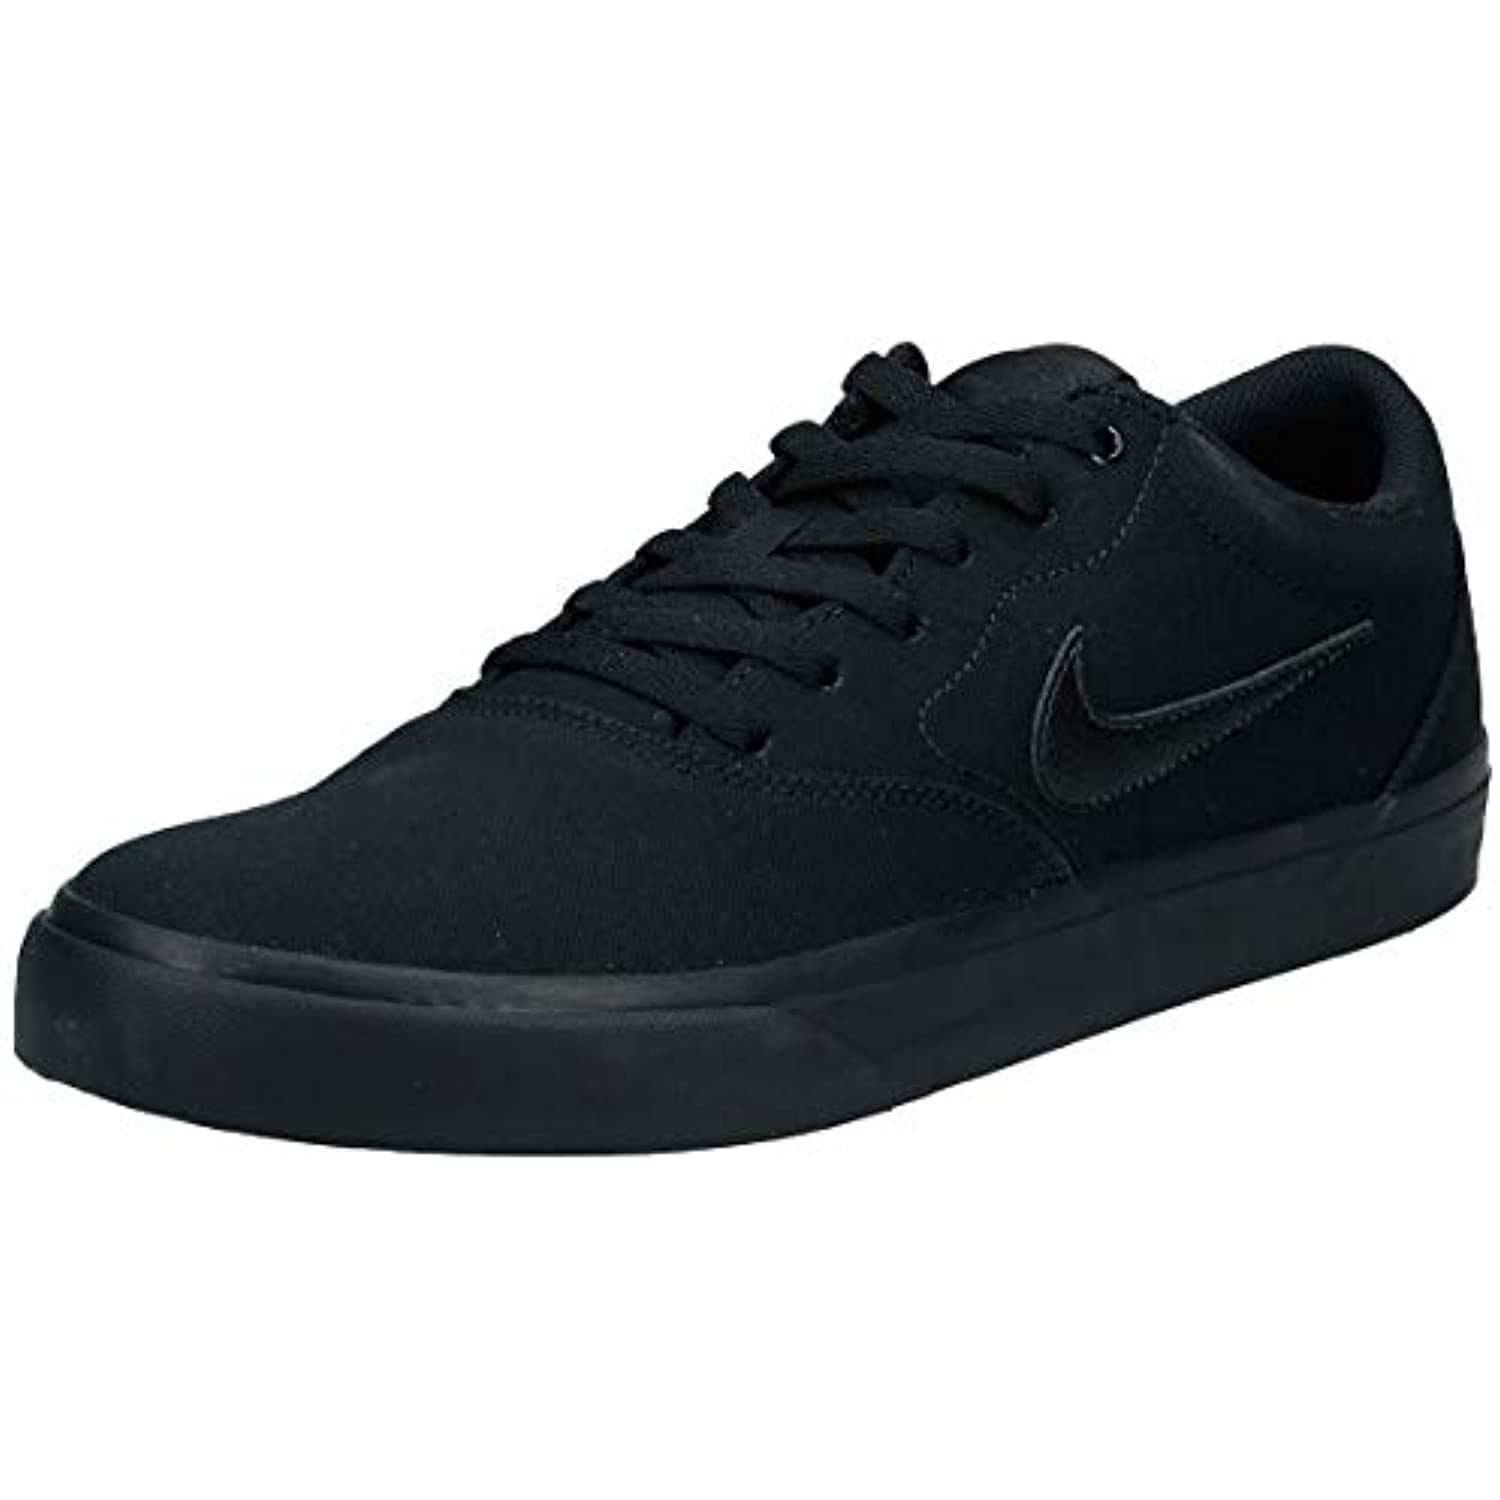 Nike SB Charge Black/Black-Black - Walmart.com